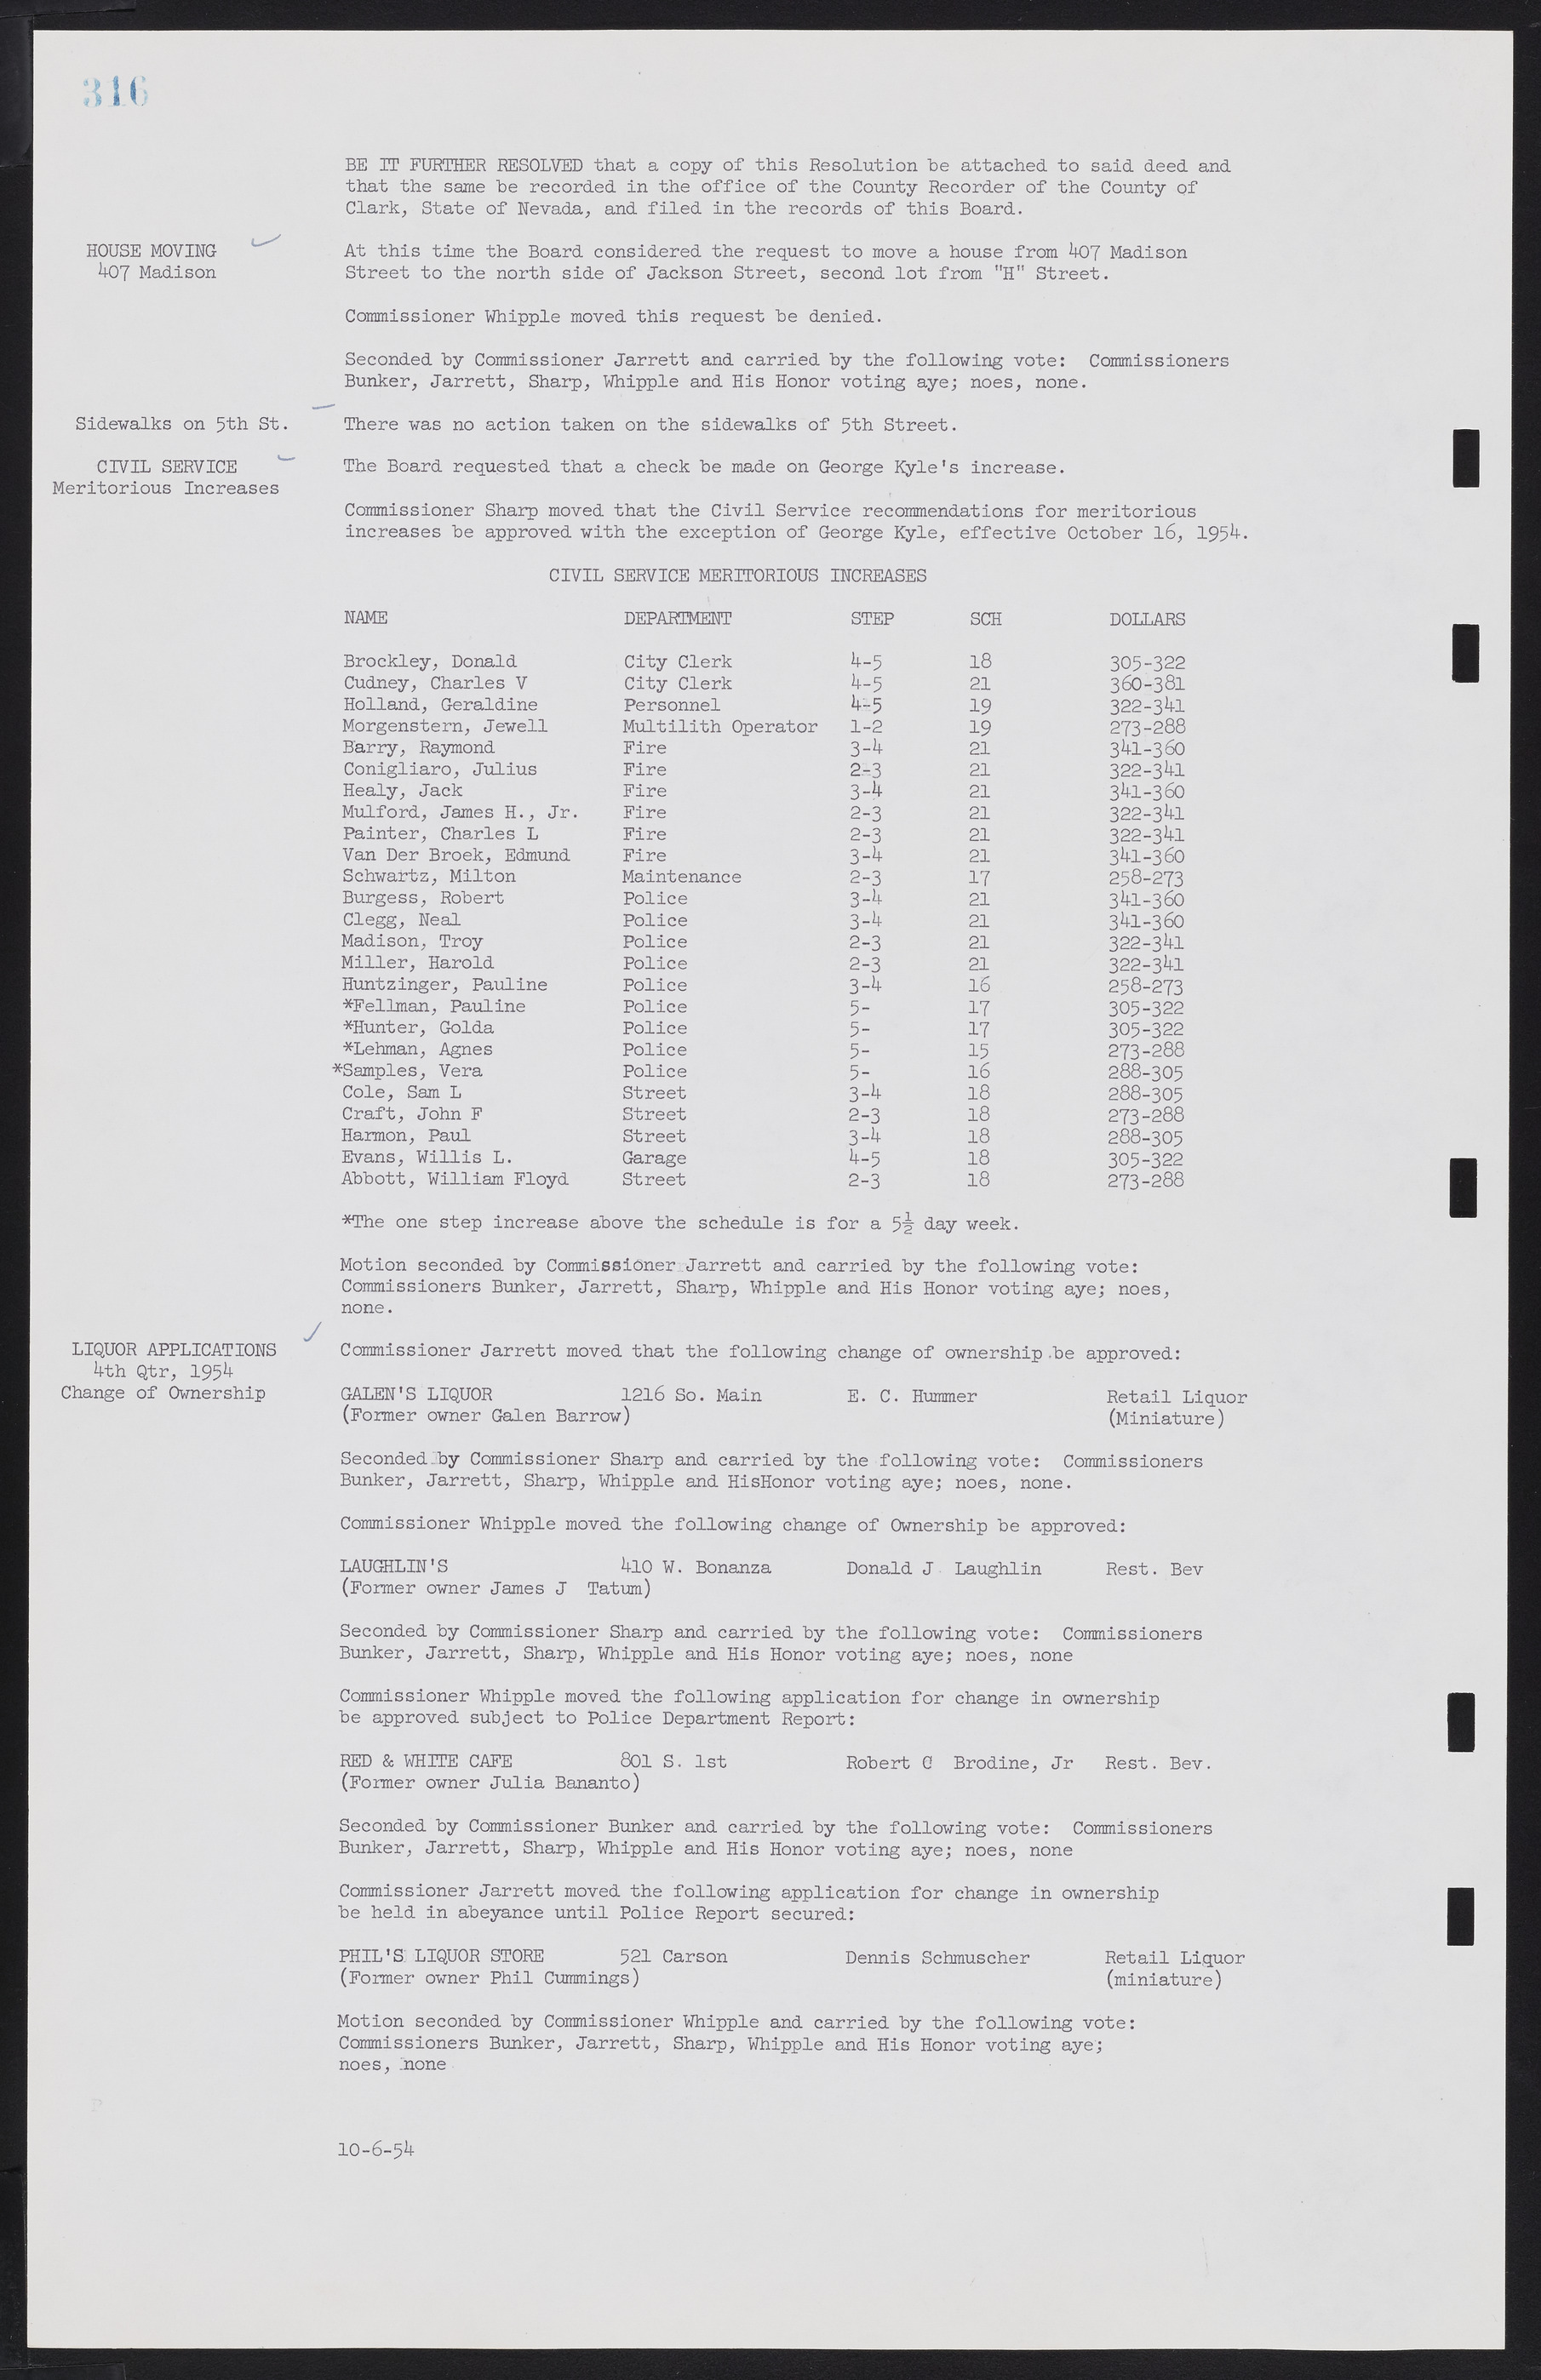 Las Vegas City Commission Minutes, February 17, 1954 to September 21, 1955, lvc000009-322